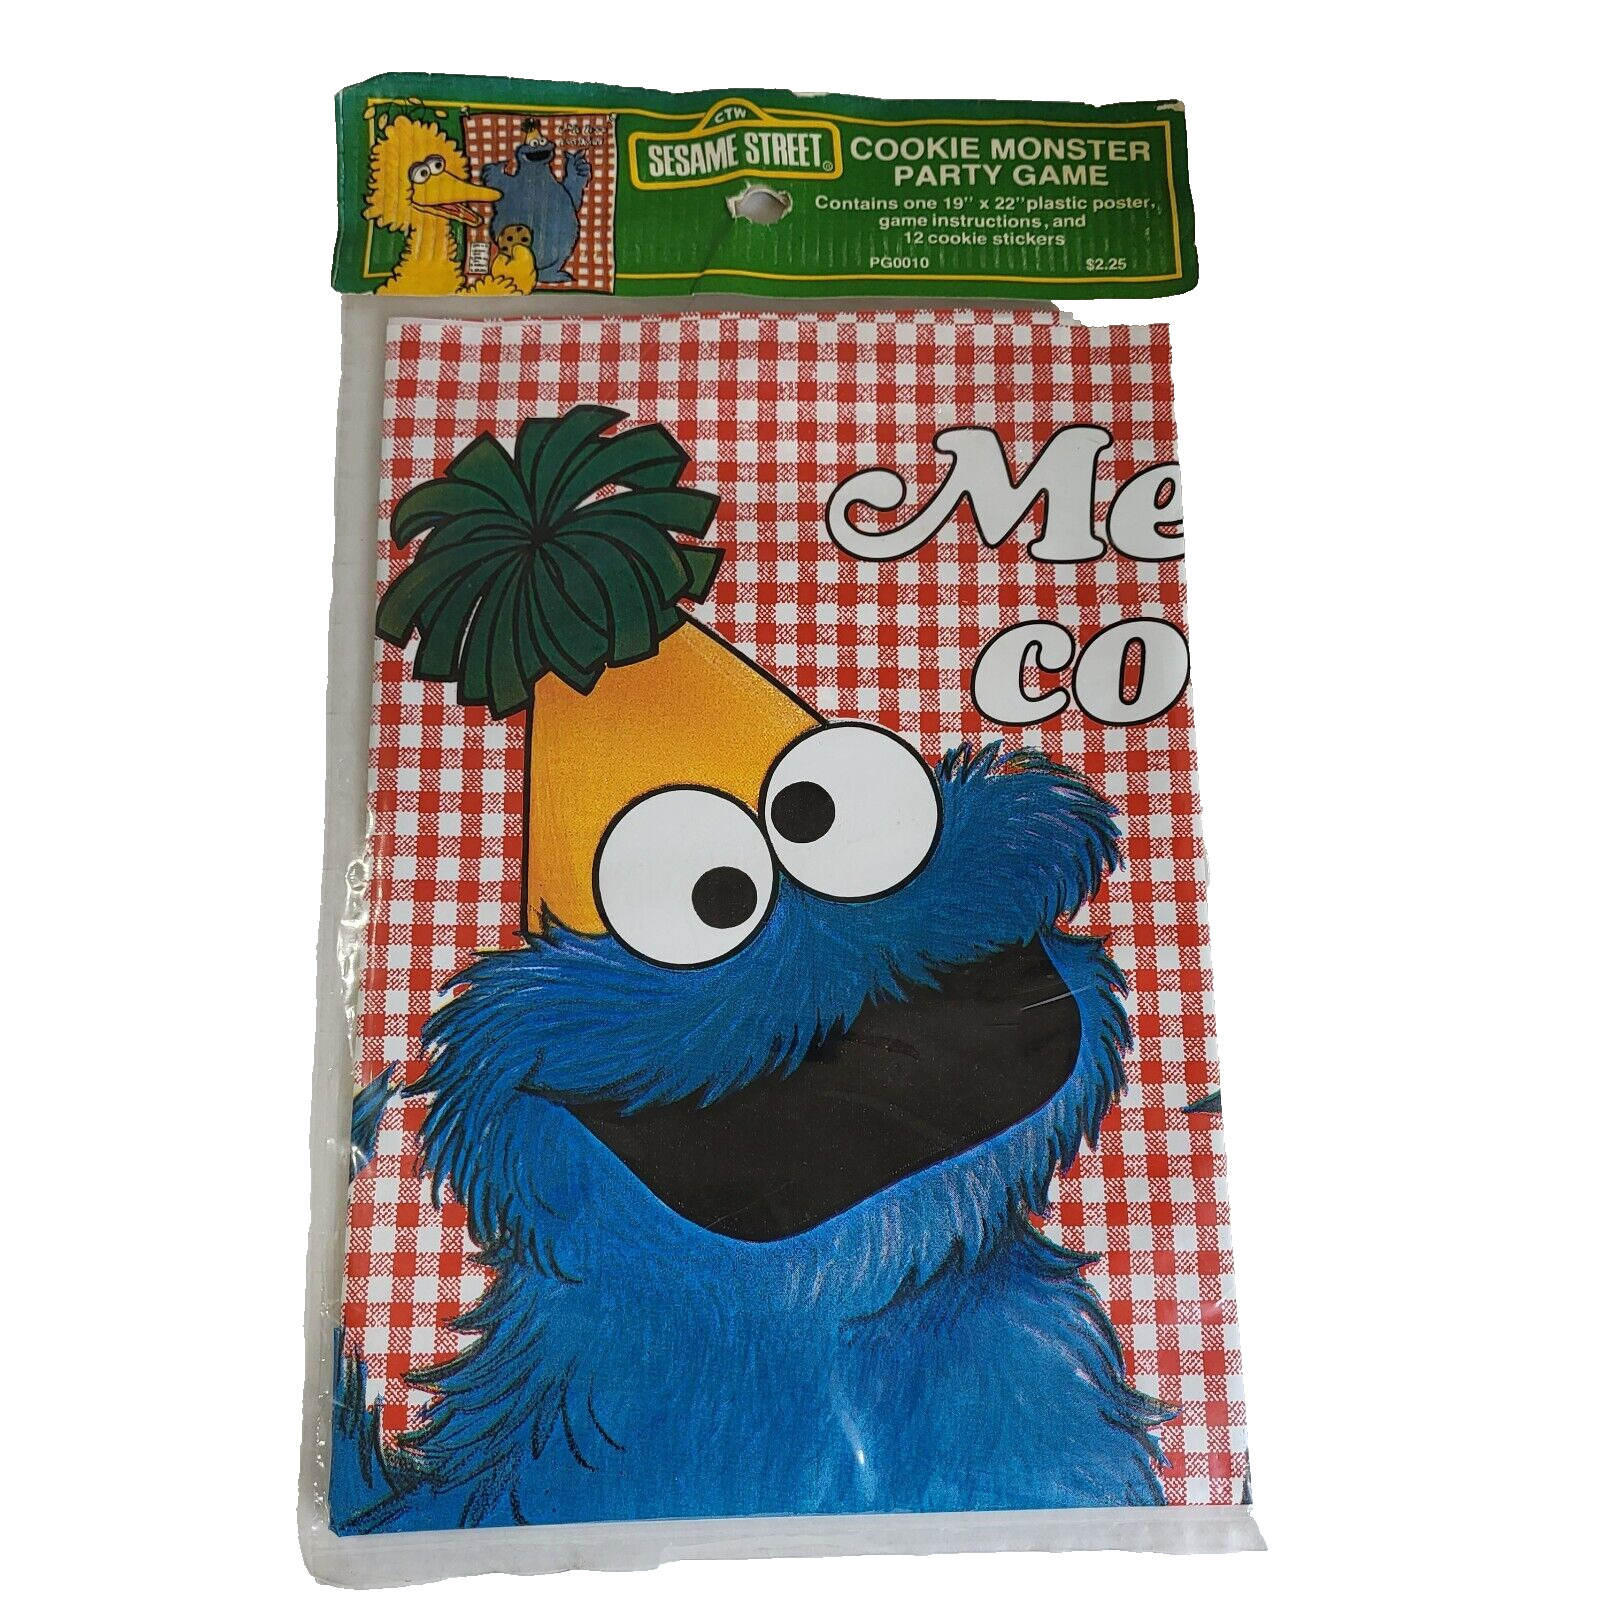 Vintage 1980 Cookie Monster Party Game Sesame Street Sealed